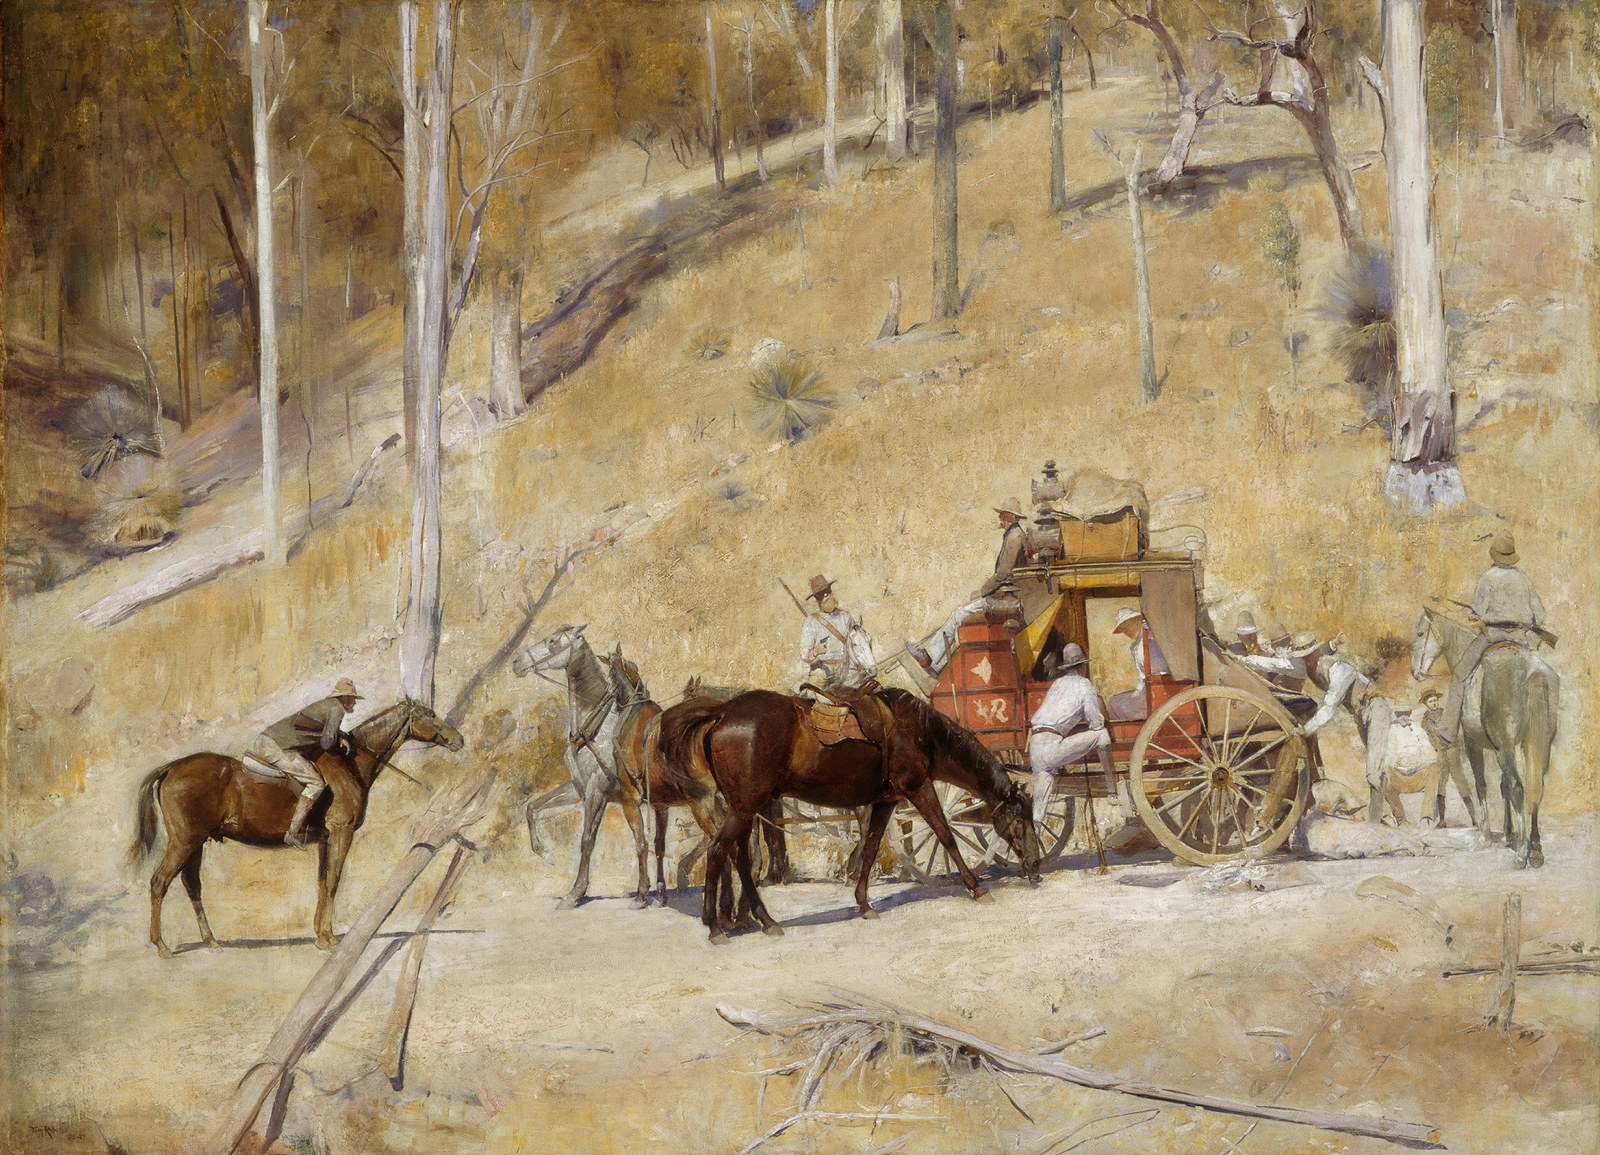 Bushrangers surrounding a coach, painting by Tom Roberts